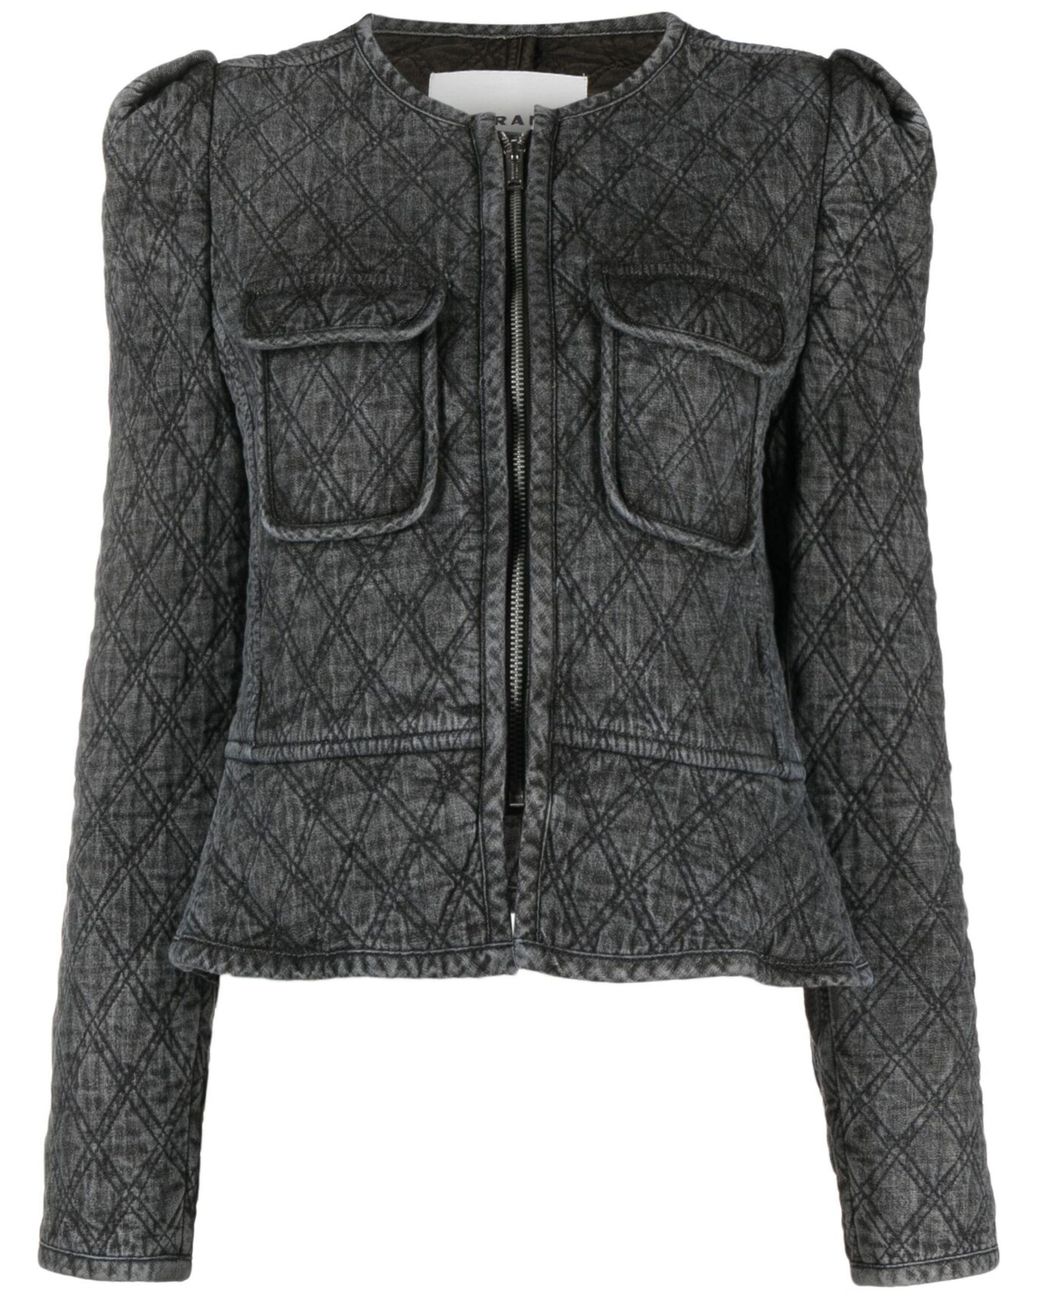 MARANT ETOILE Marant Étoile - Deliona Quilted Cotton Jacket in Black | Lyst